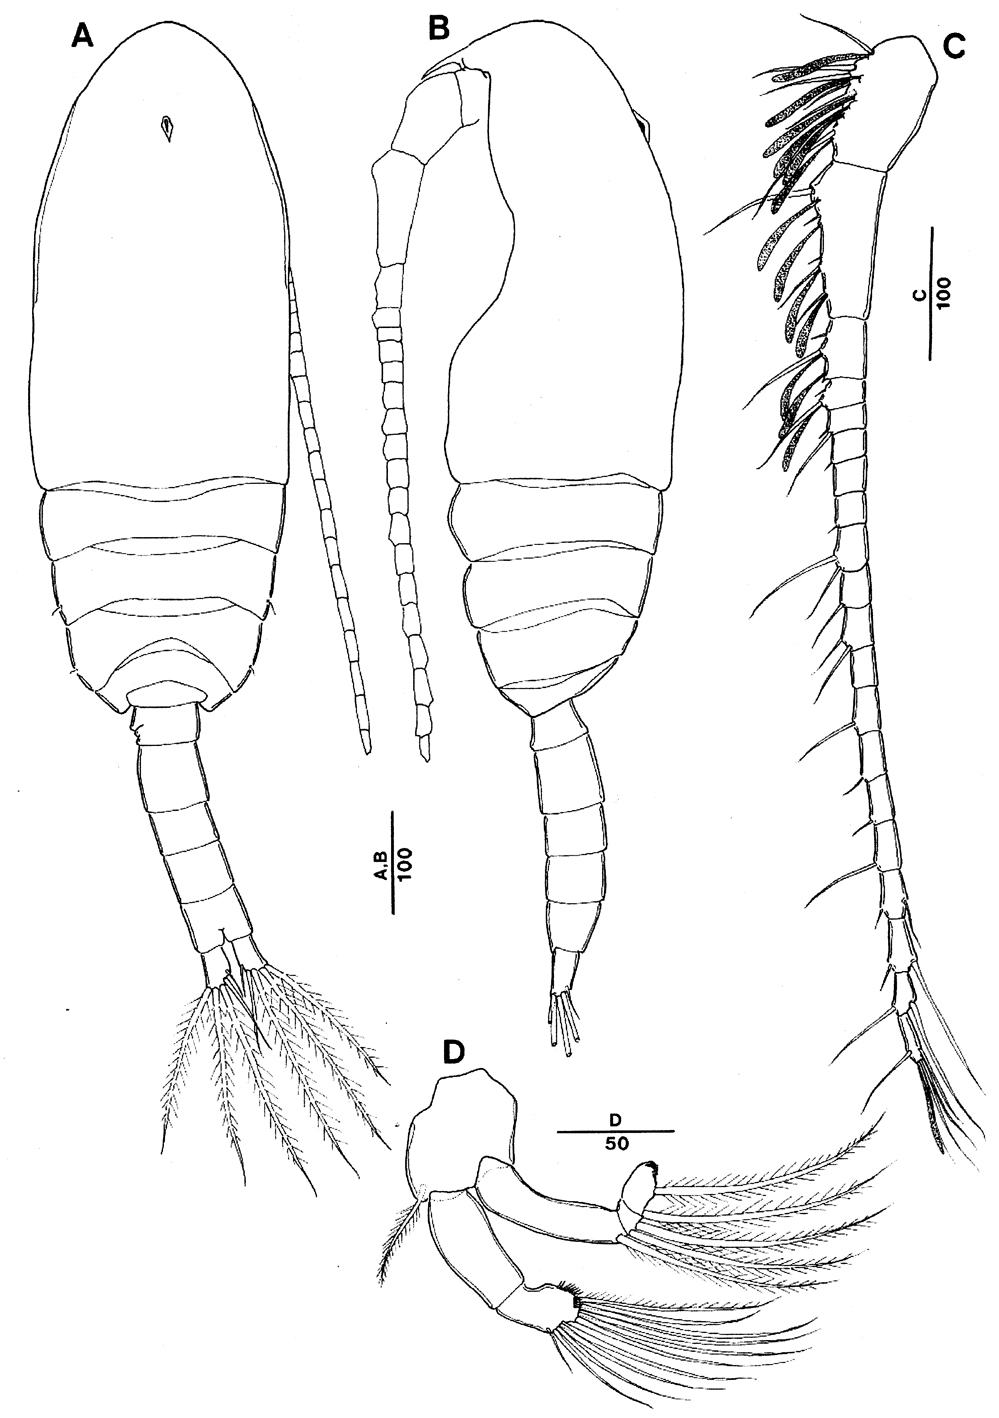 Species Bestiolina coreana - Plate 9 of morphological figures